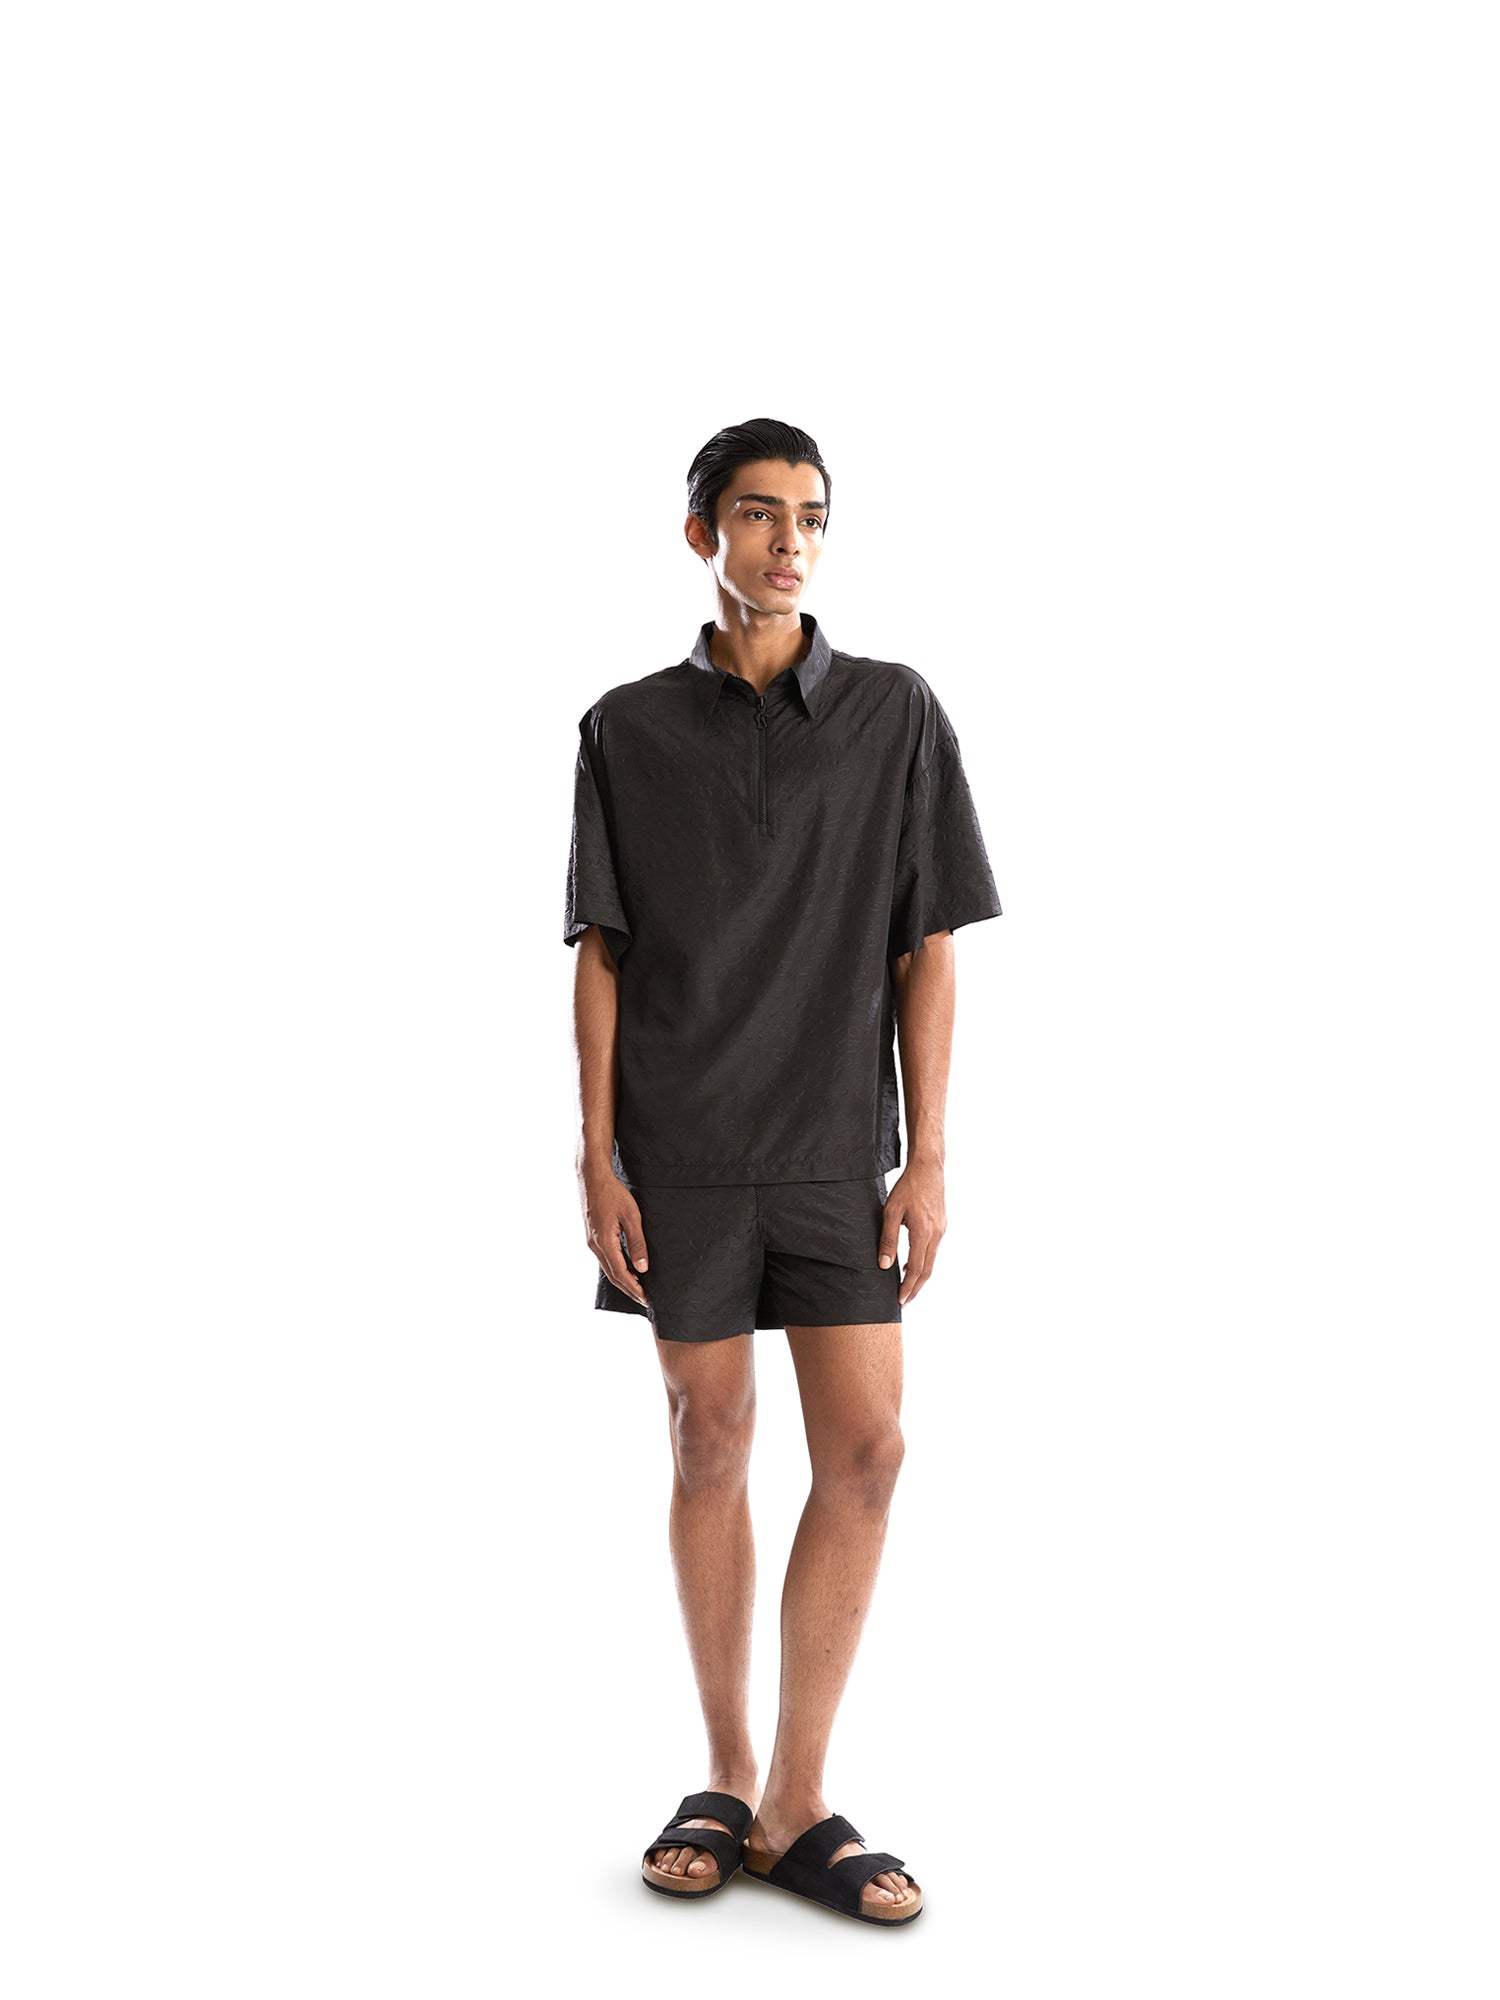 Black embossed shorts & t-shirt co-ord set